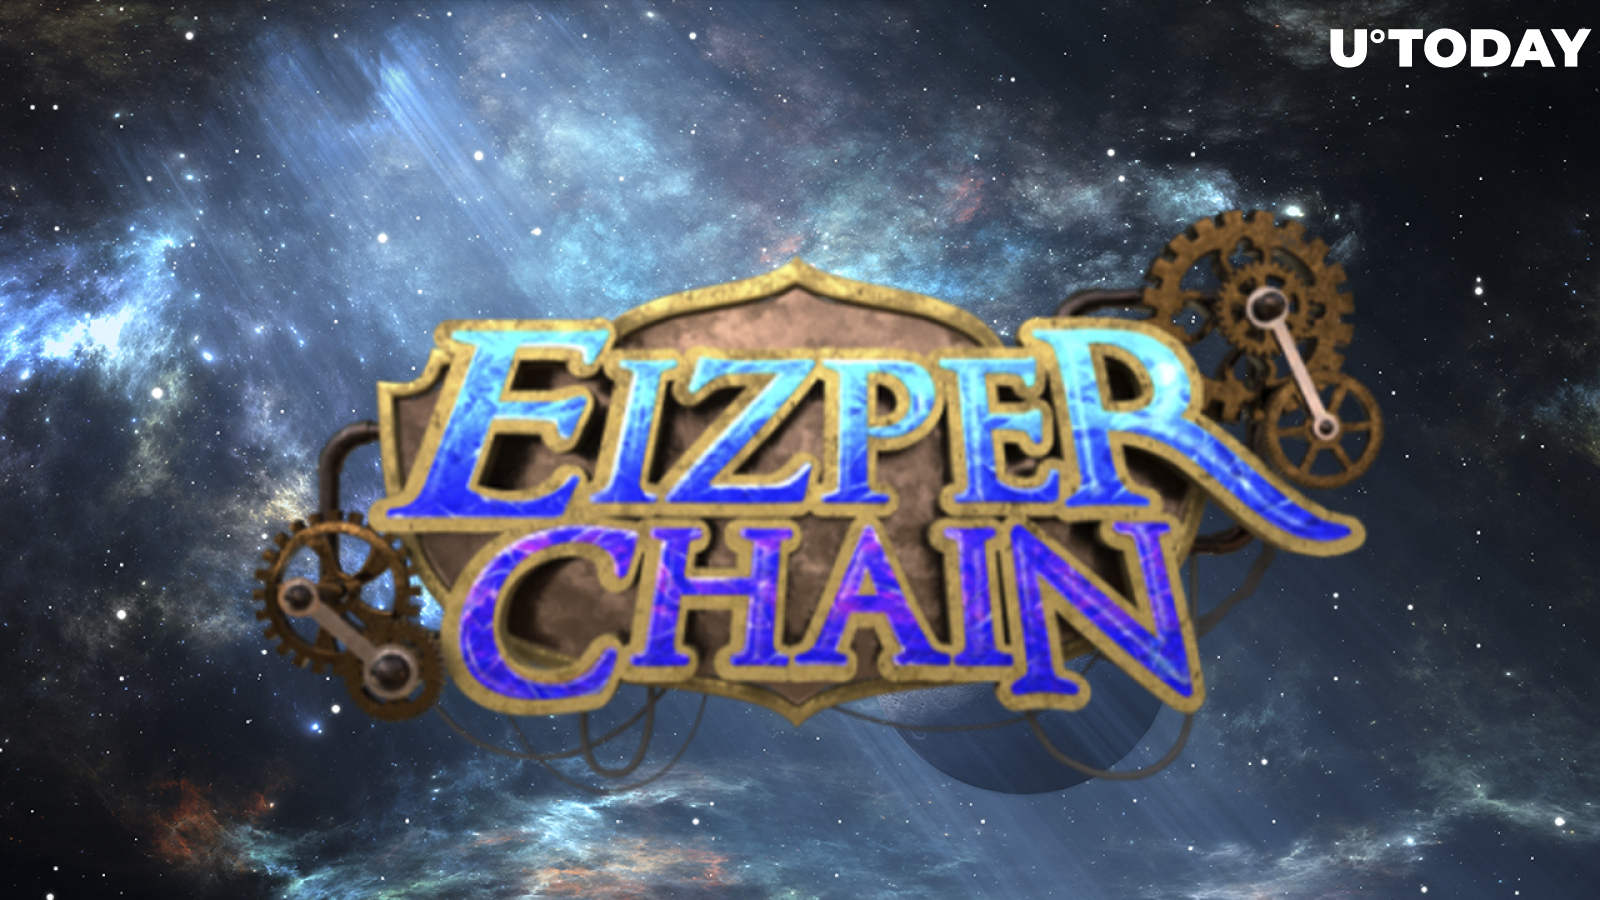 Solana-based GameFi Eizper Chain Raises $2 Million in Two-Stage Fundraising